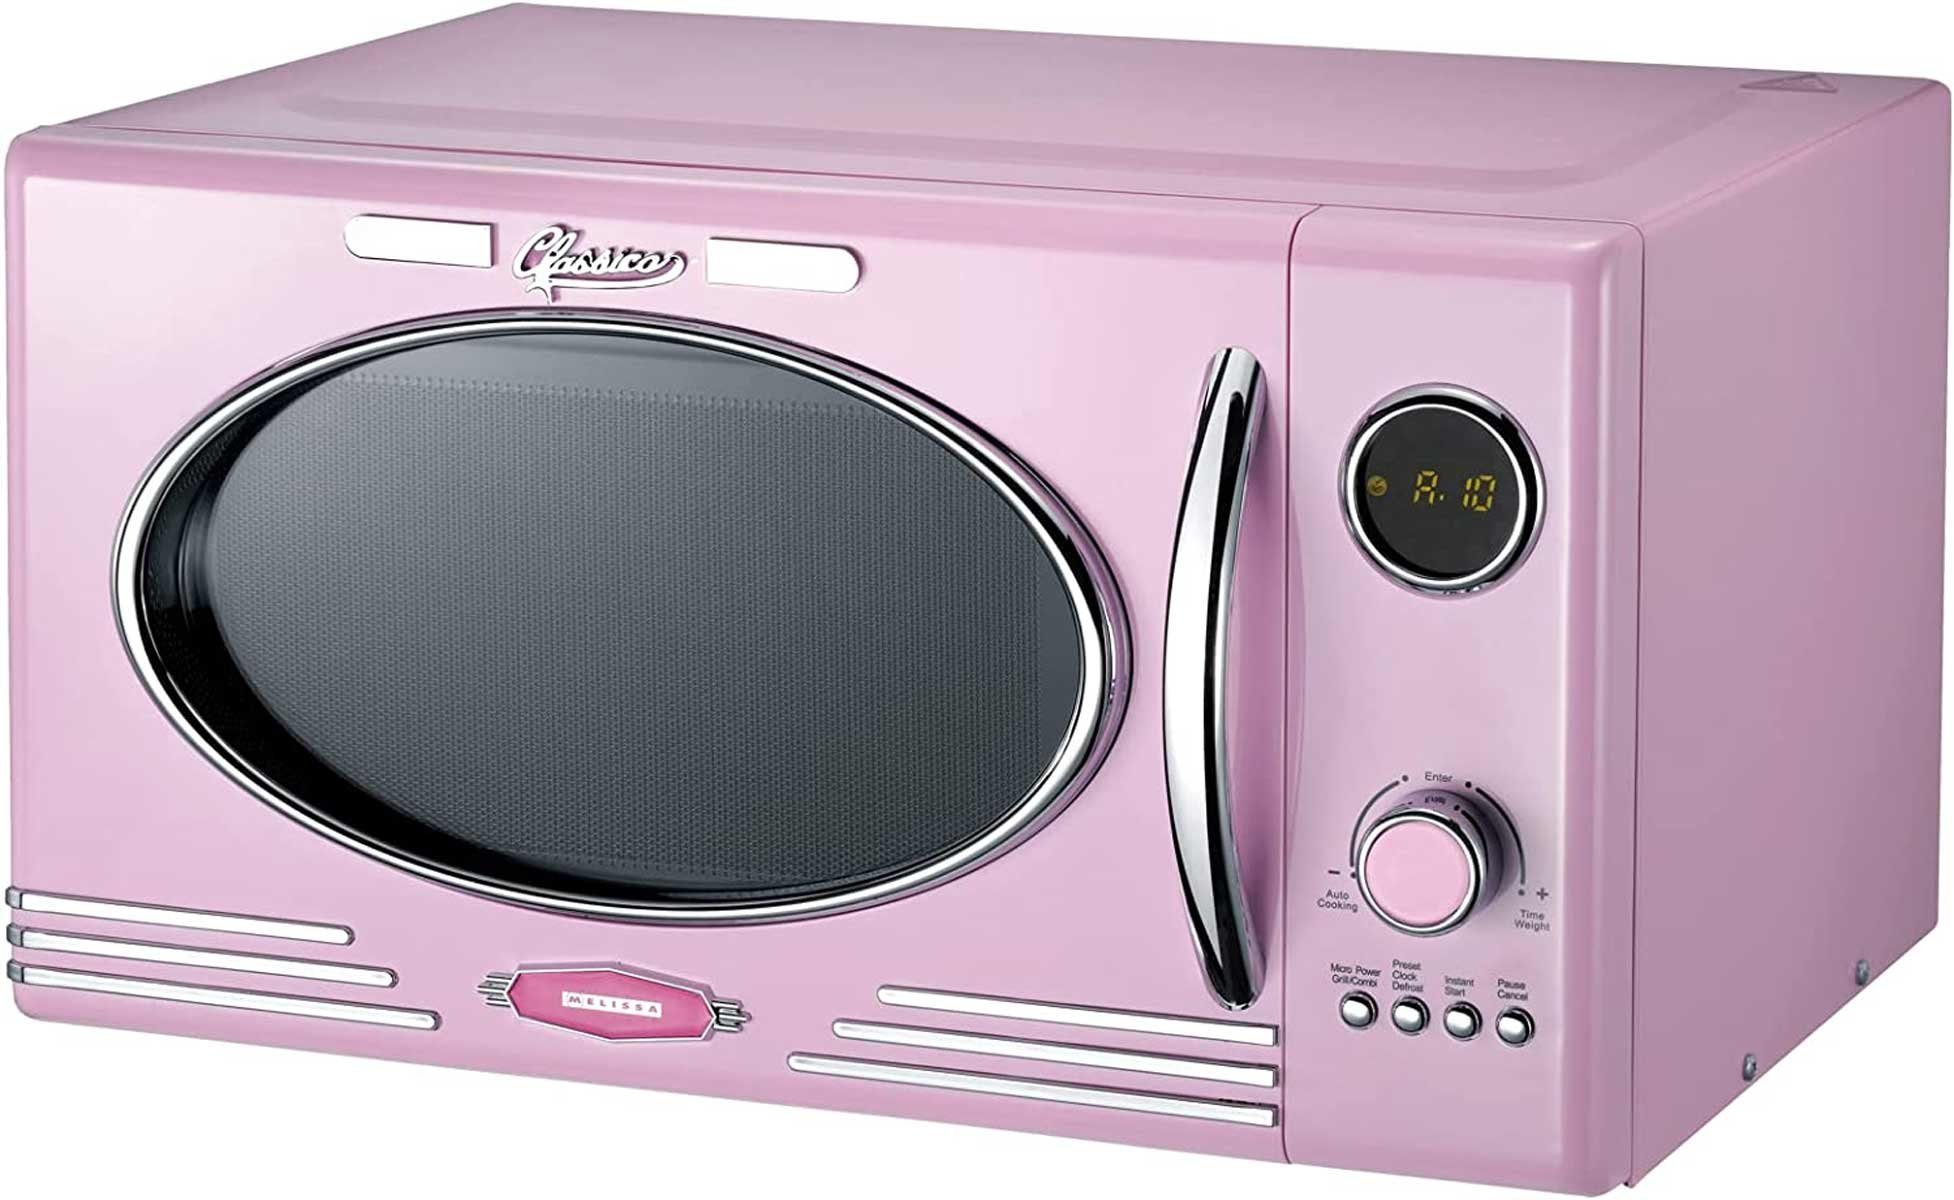 MELISSA Mikrowelle 16330130 pink-rosa im Retro Design mit Grill